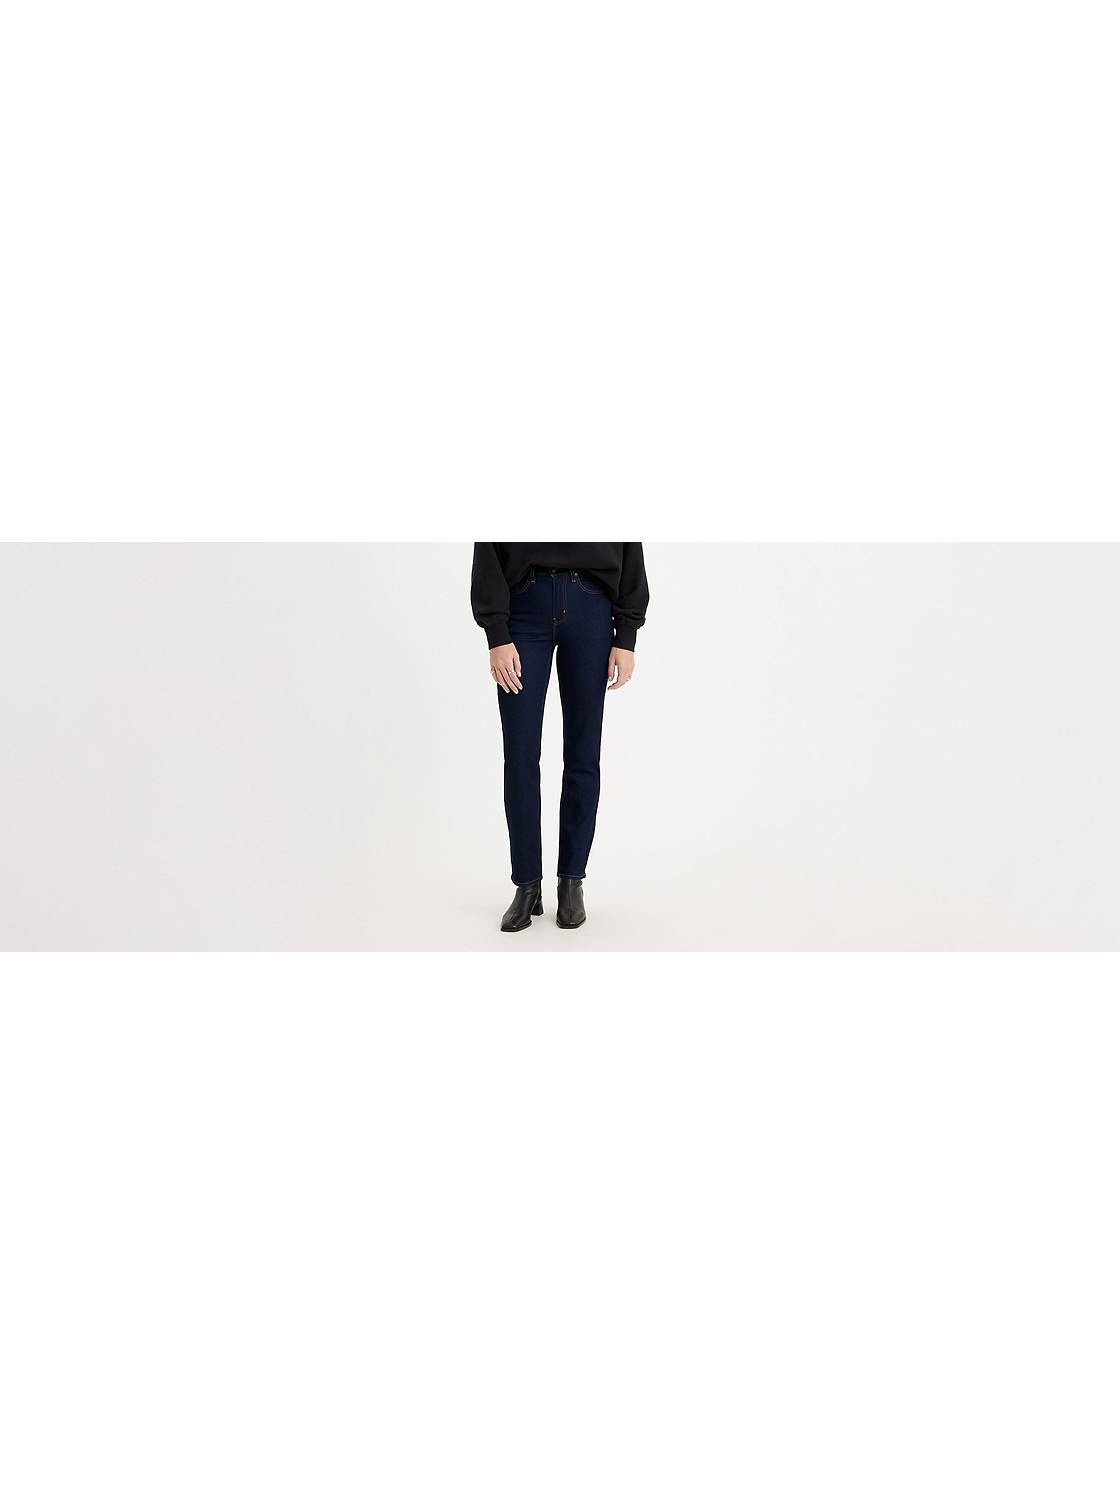  Levi's Jeans cortos rectos de tiro alto 724 para mujer, Índigo  oscuro usado en : Ropa, Zapatos y Joyería